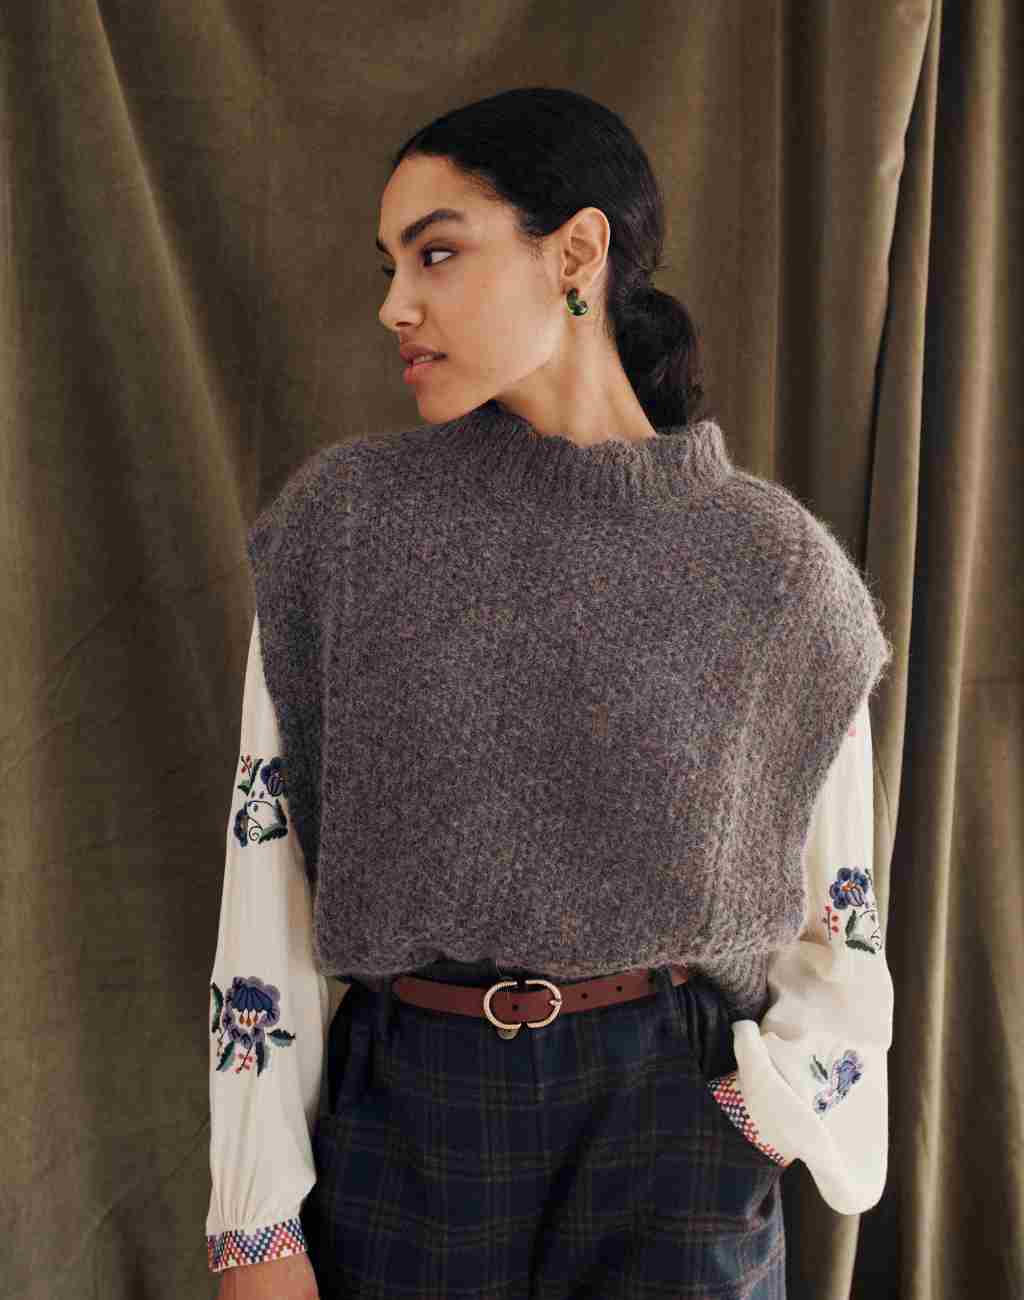 Sleeveless Knit Sigou Sweater with Scalloped Neckline - Visit Nifty Louise Misha 